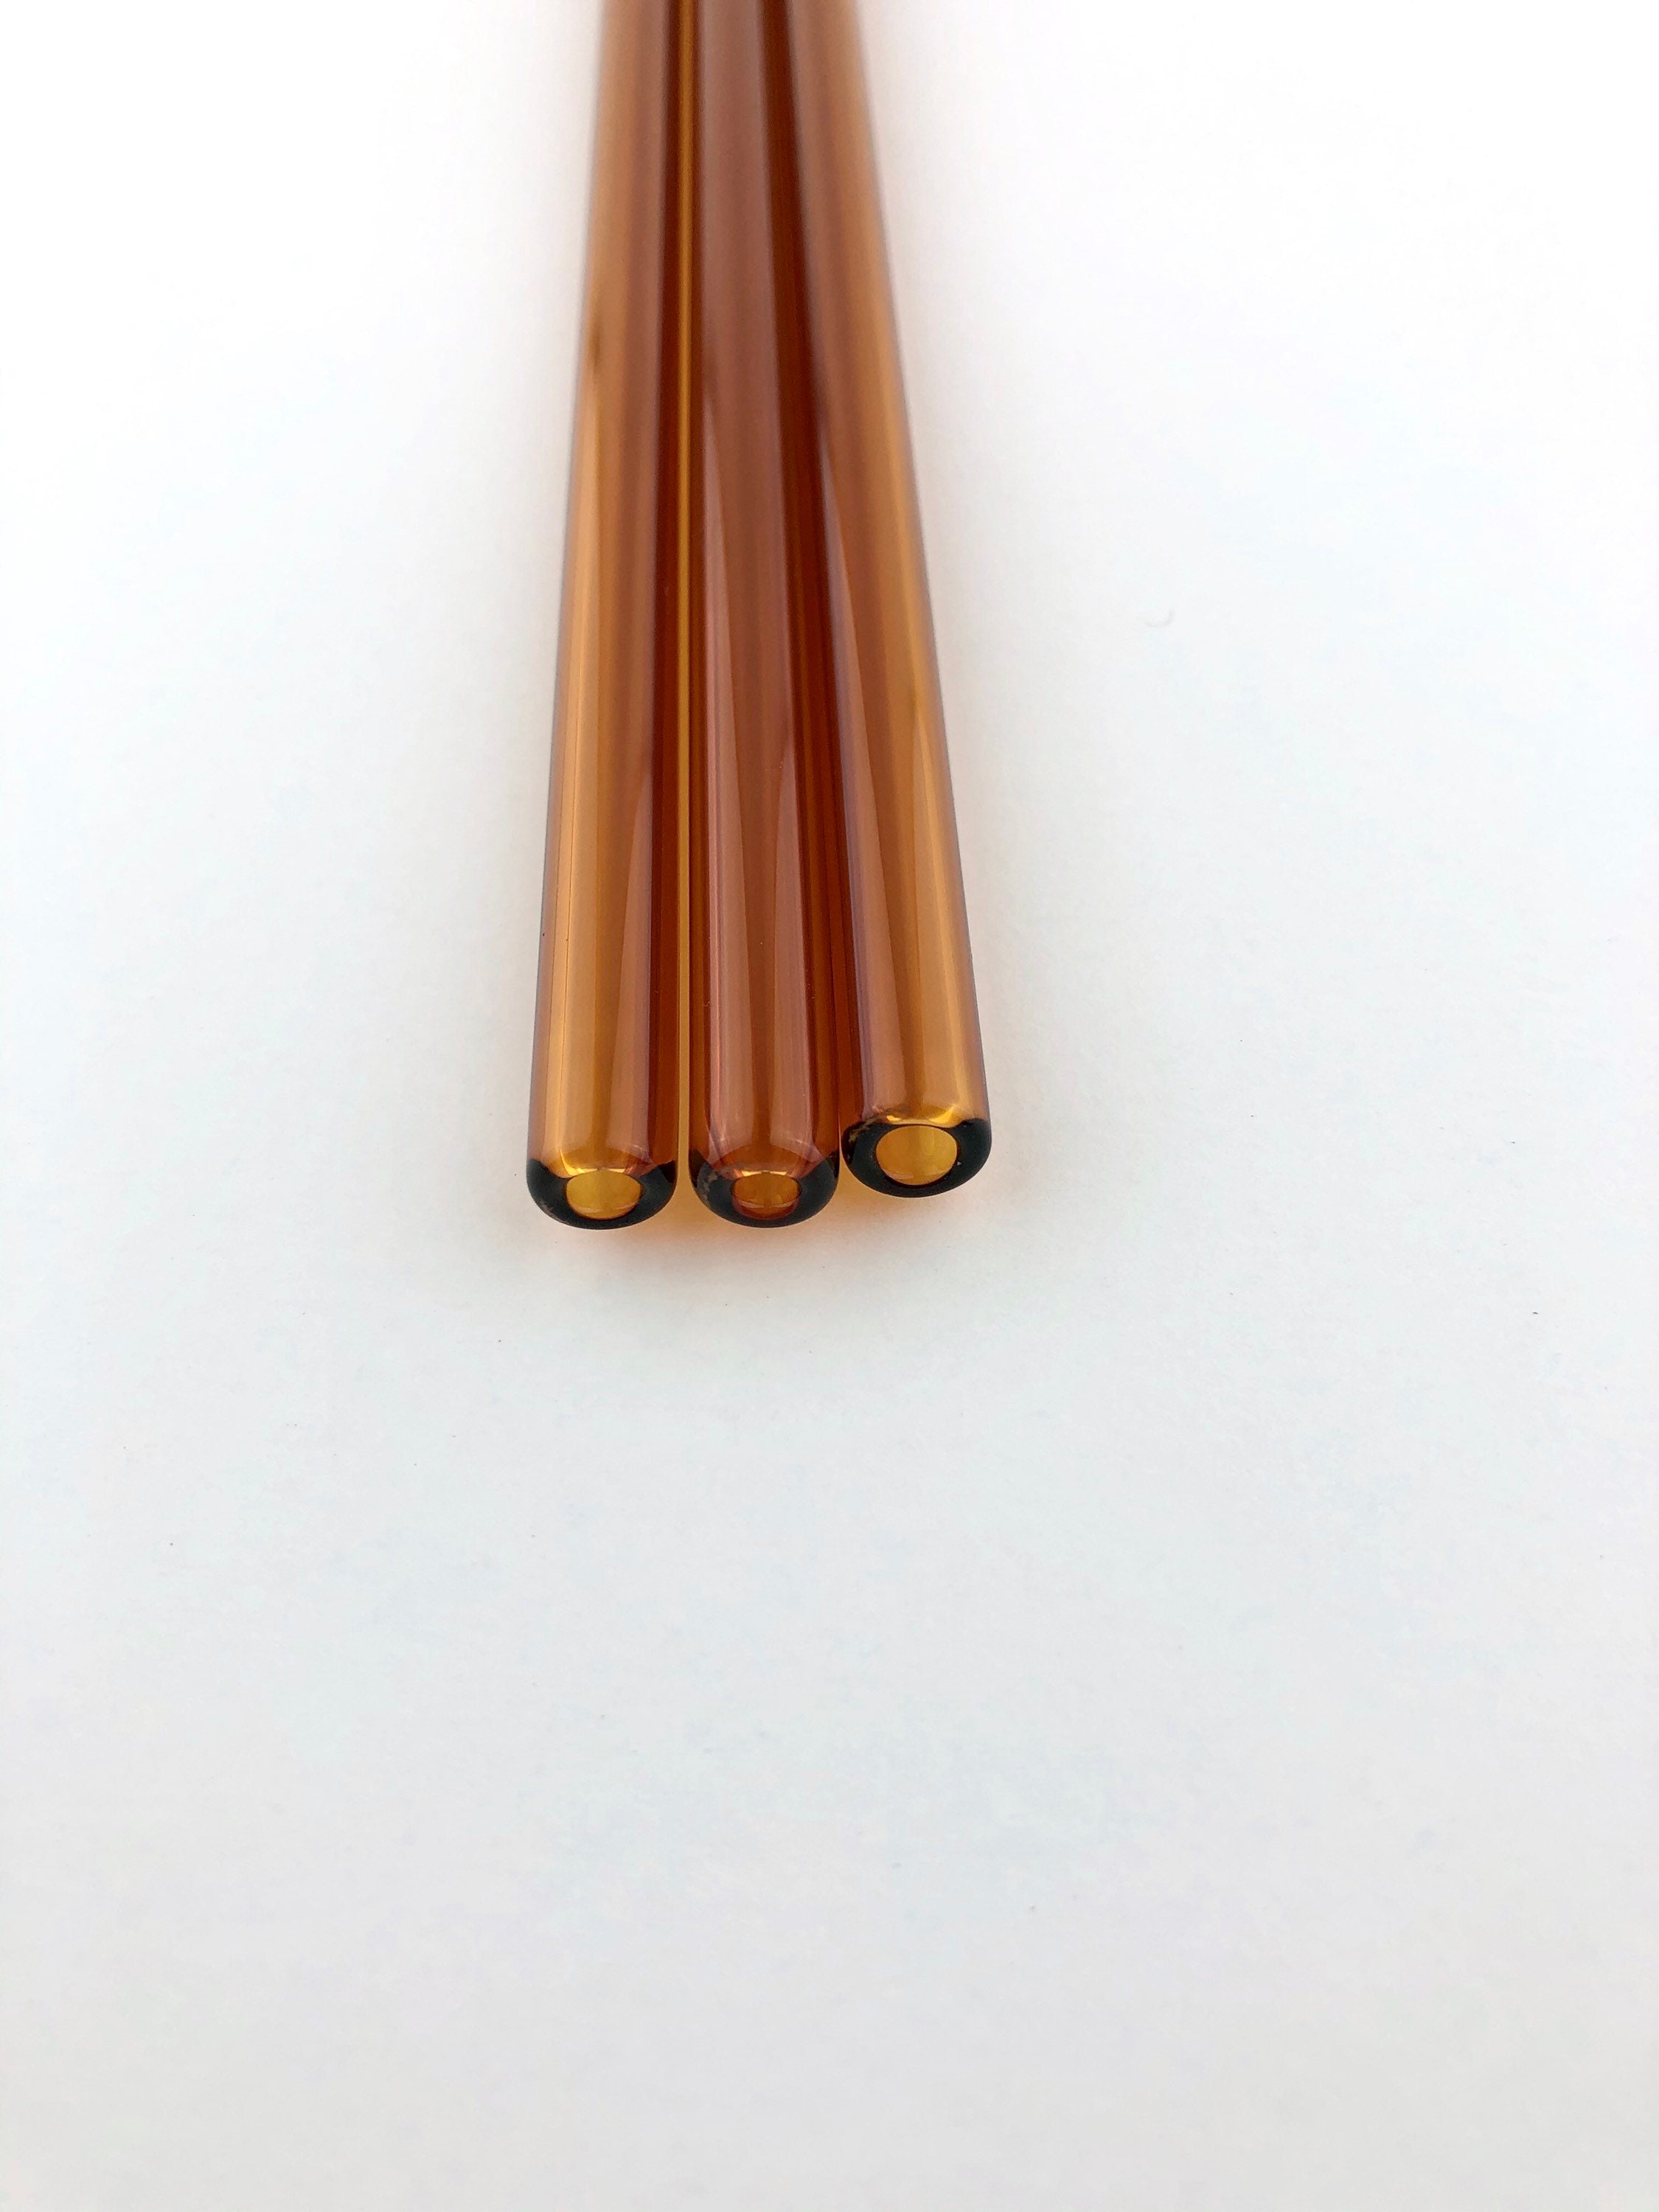 Amber GLASS STRAW - Amber Straws, Reusable Straws, Eco Friendly Straws, Smoothie Straws, Colored Straws, Glass Straws